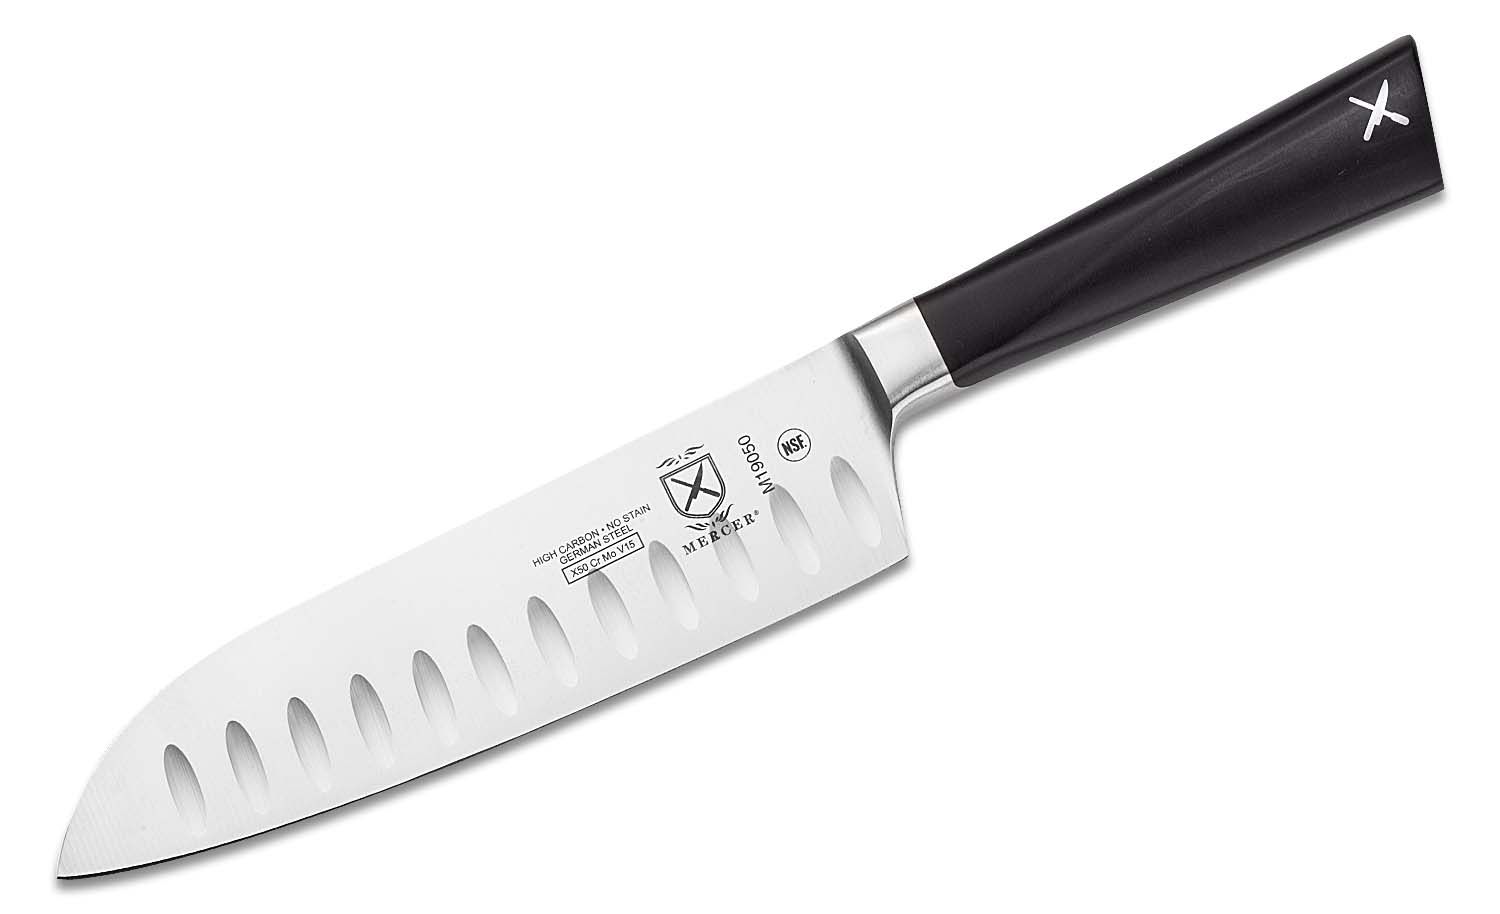 Mercer Culinary Genesis 7'' Santoku Knife Review 